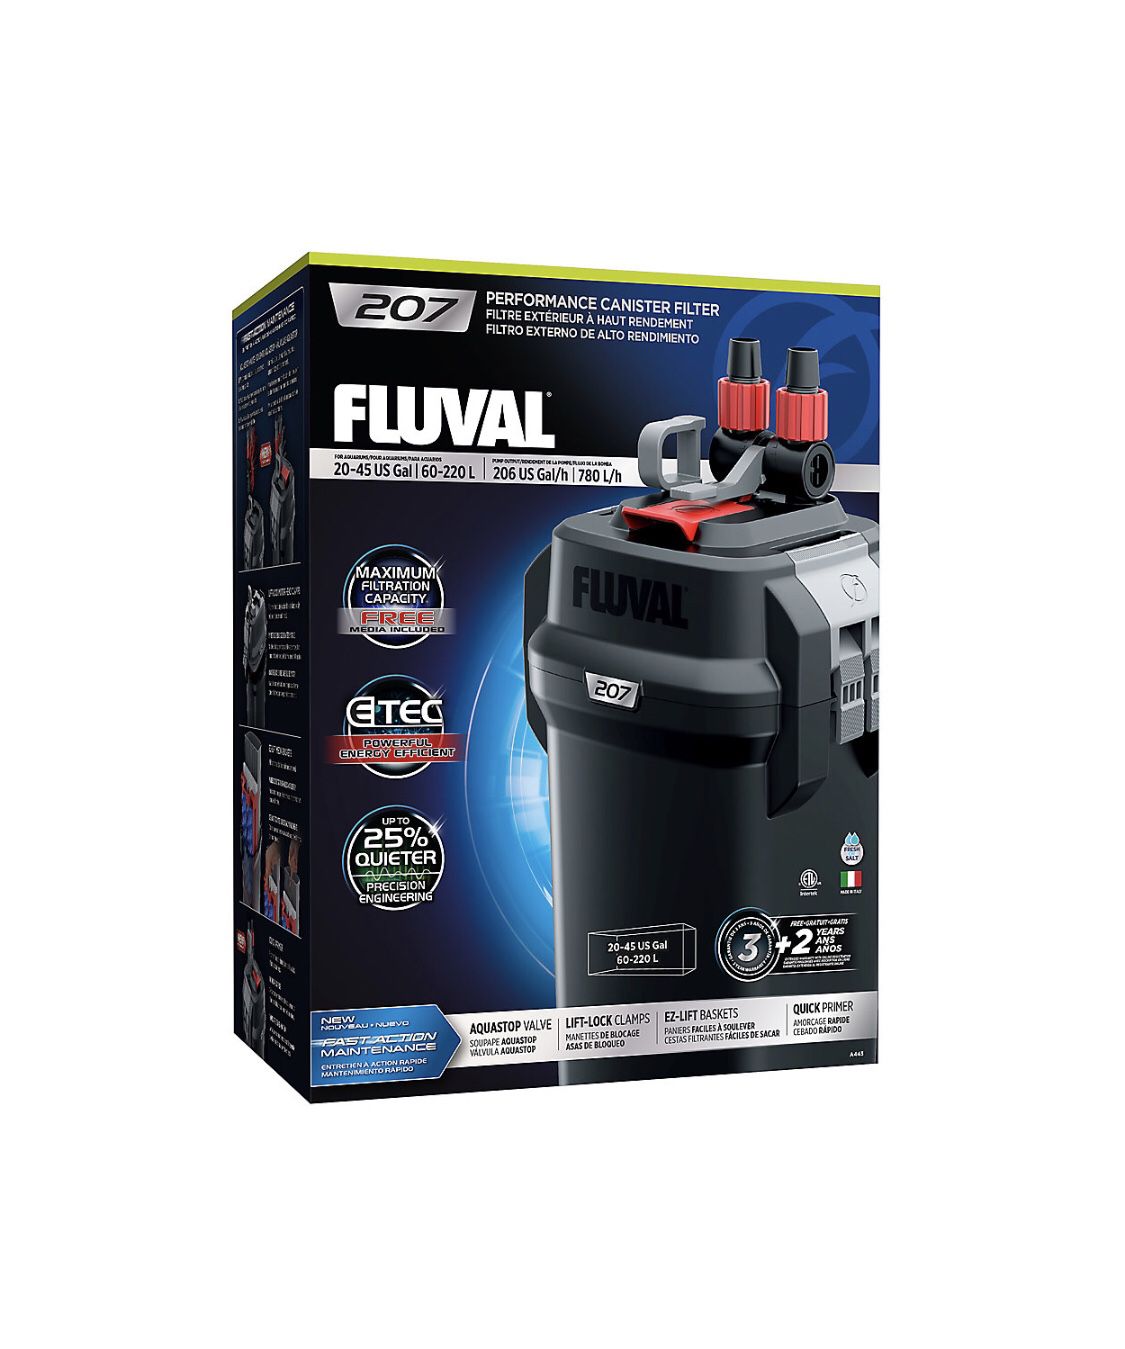 Fluval® 207 Performance Canister Filter